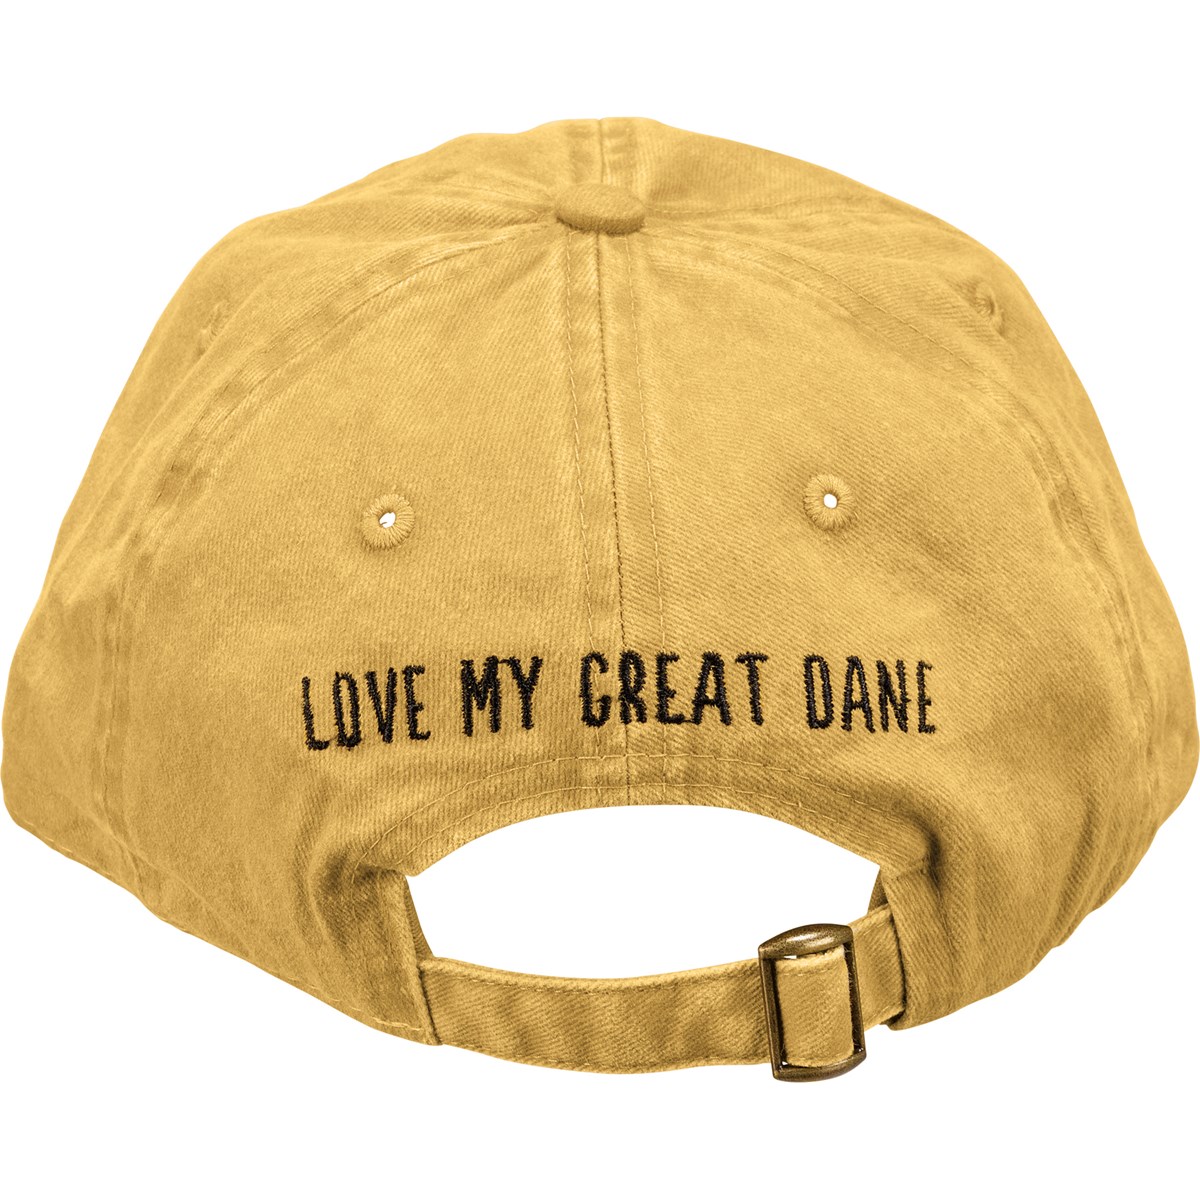 Love My Great Dane Baseball Cap - Cotton, Metal